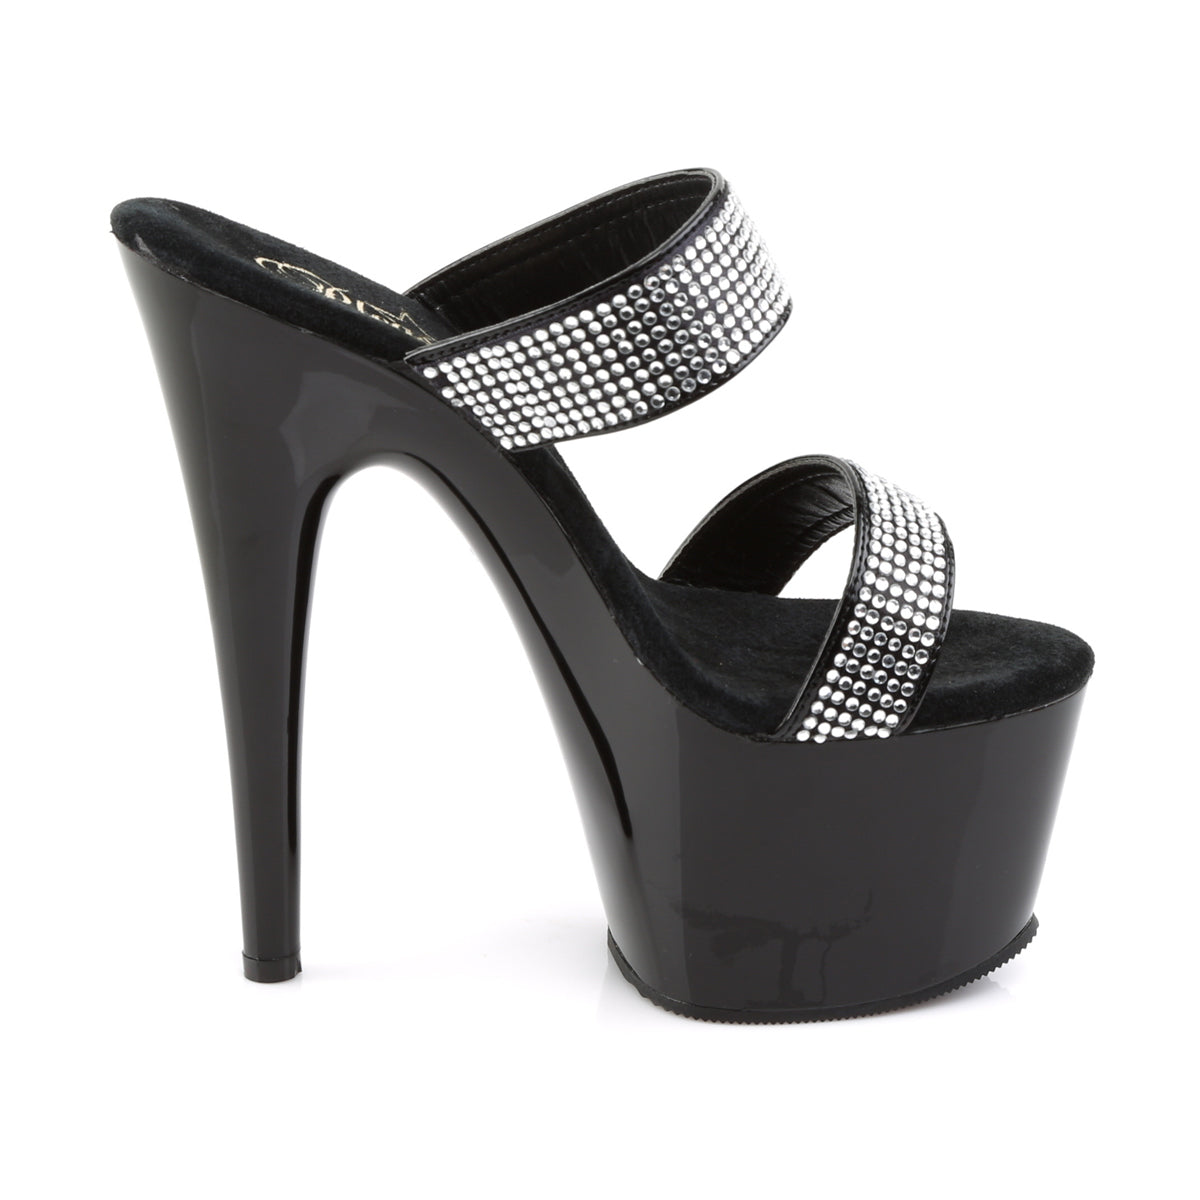 ADORE-702-2 Black & Silver Peep Toe High Heel